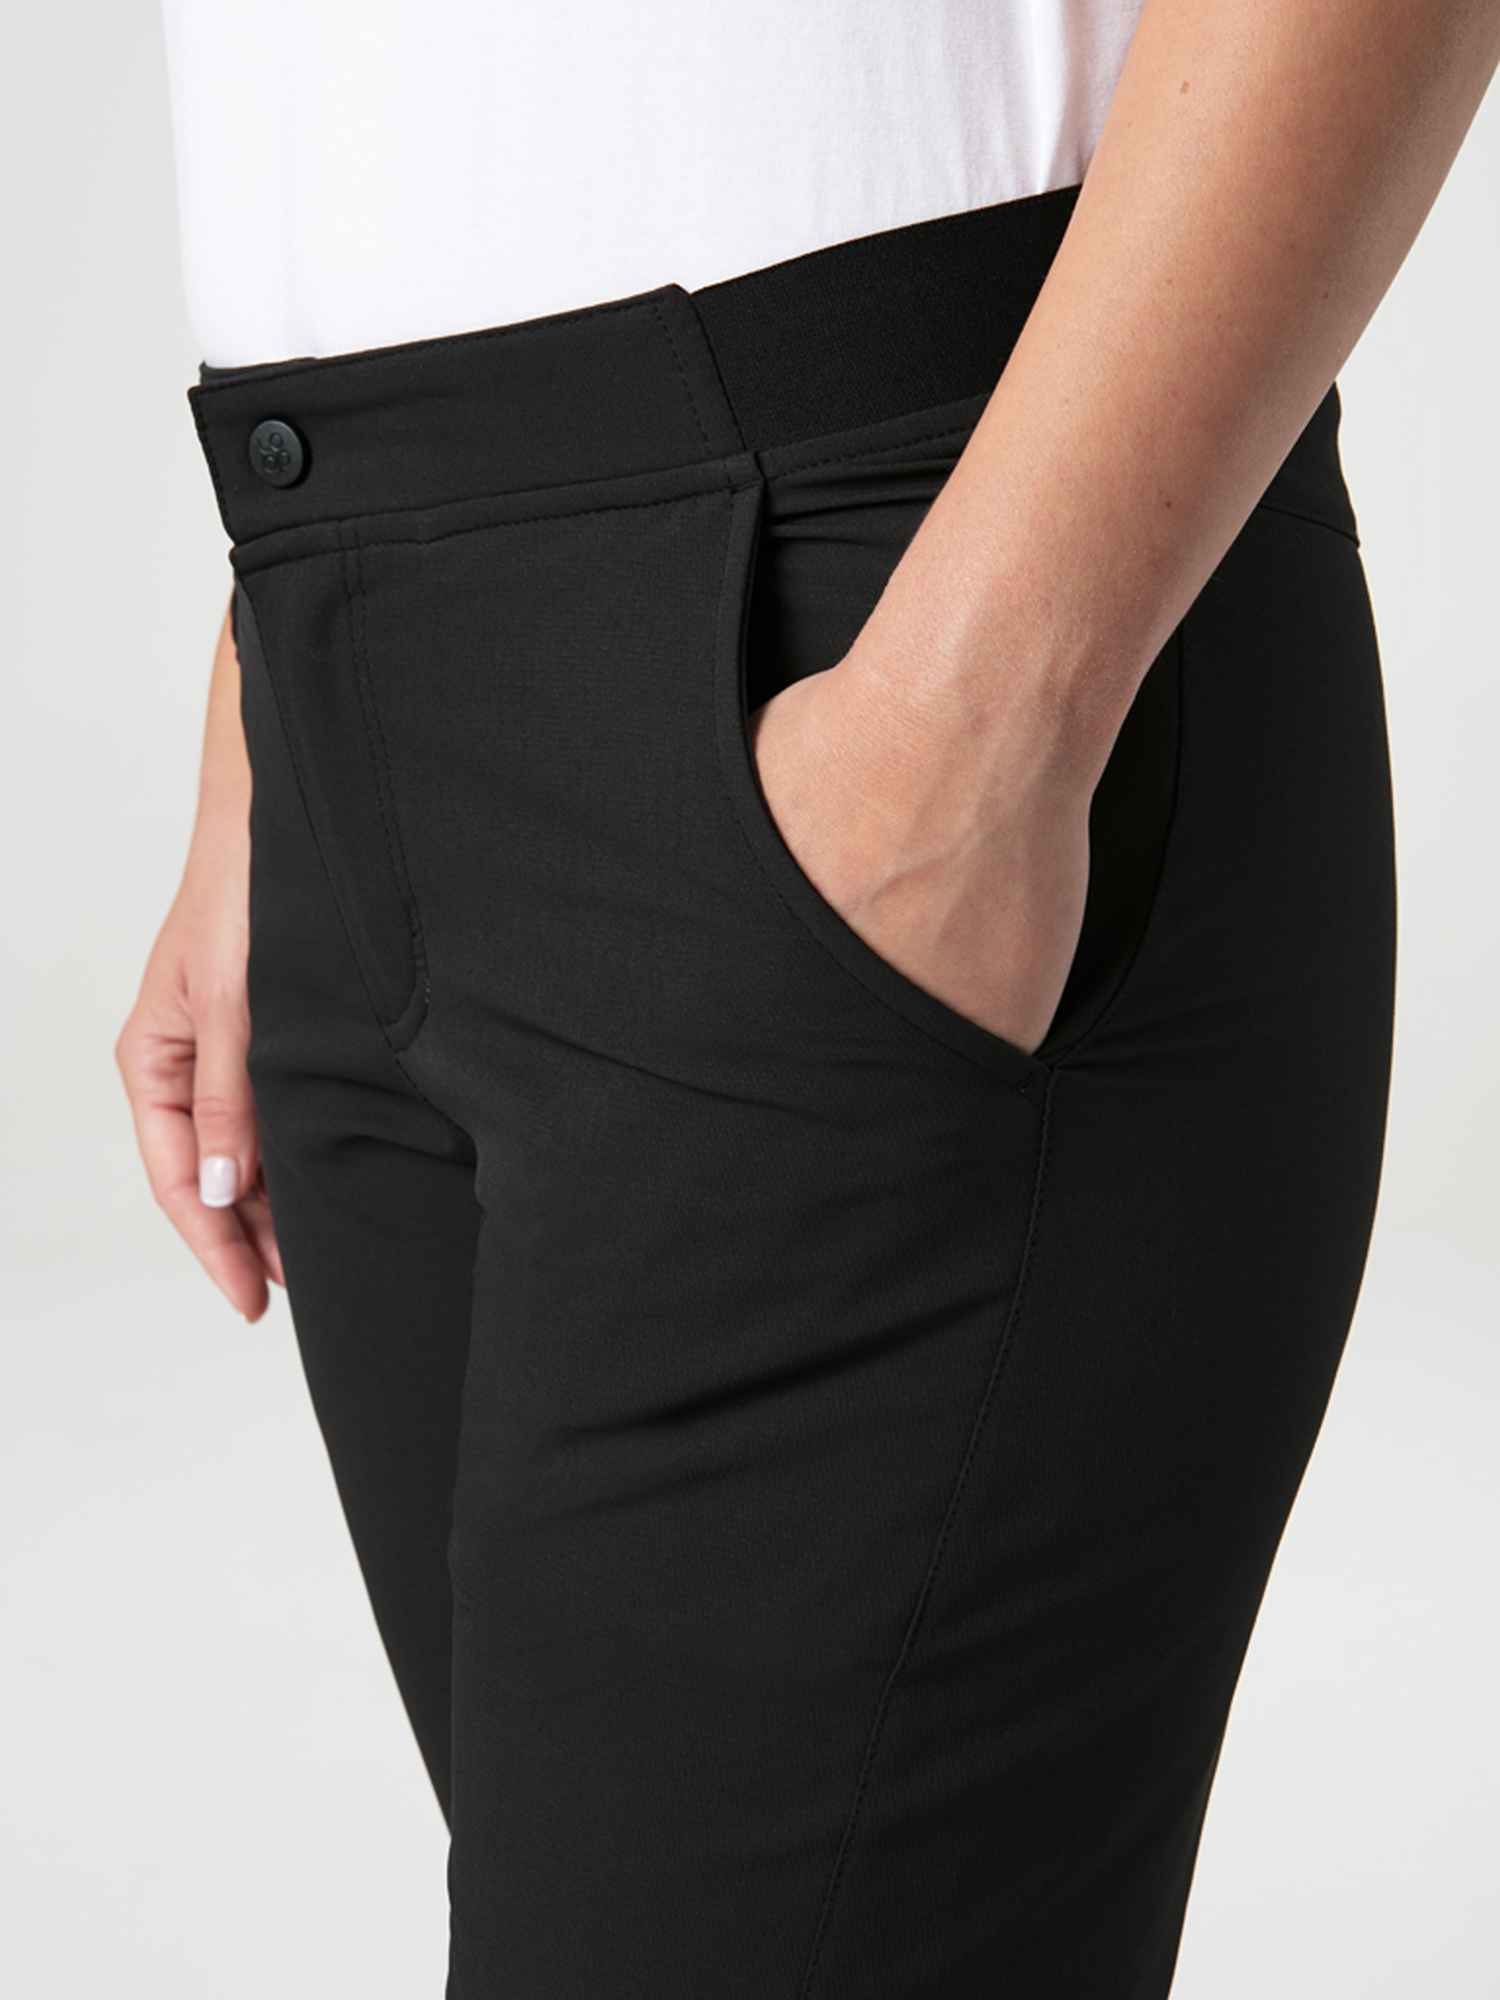 Women's softshell trousers